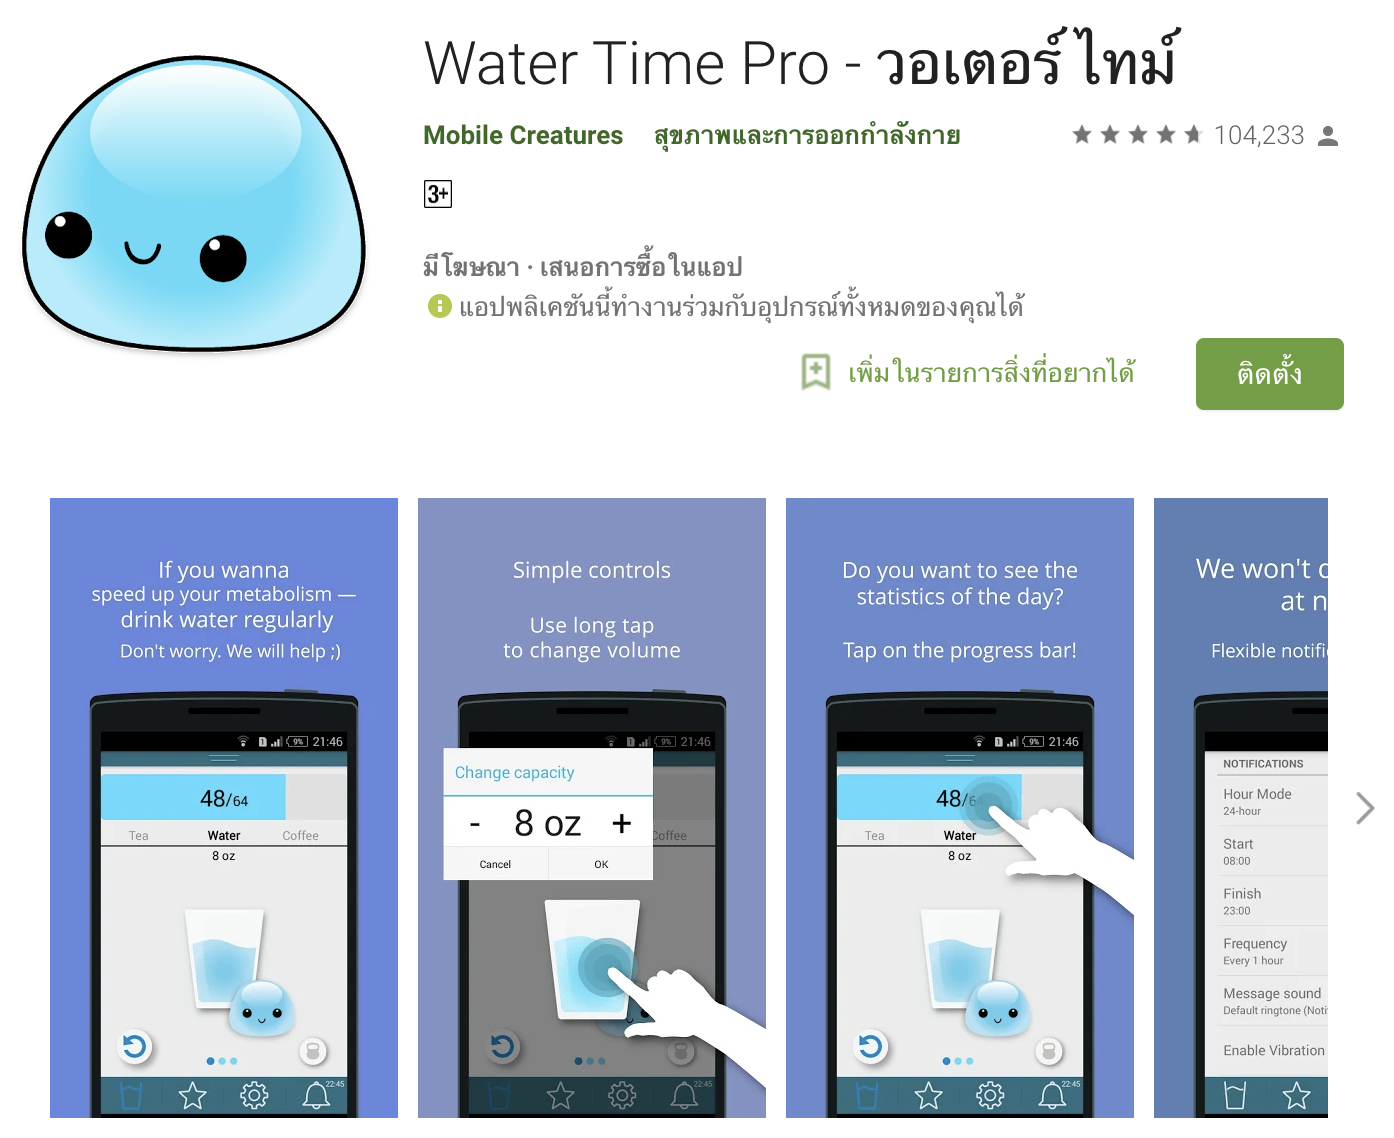 Water Time Pro - วอเตอร์ ไทม์